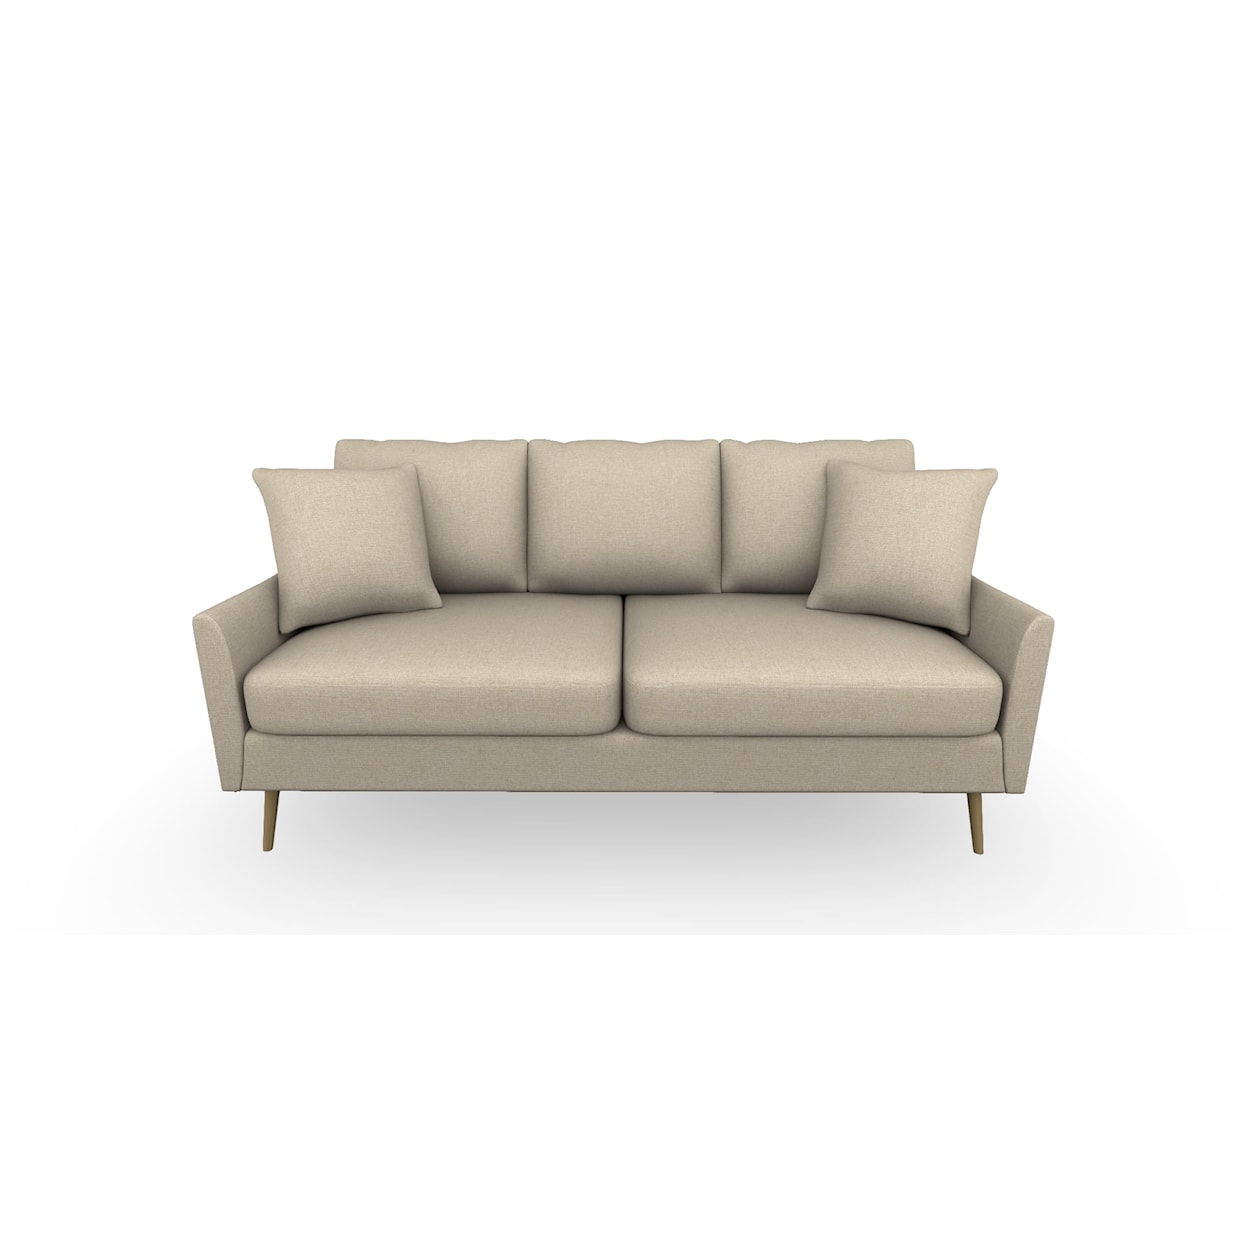 Bravo Furniture Smitten Stationary Sofa